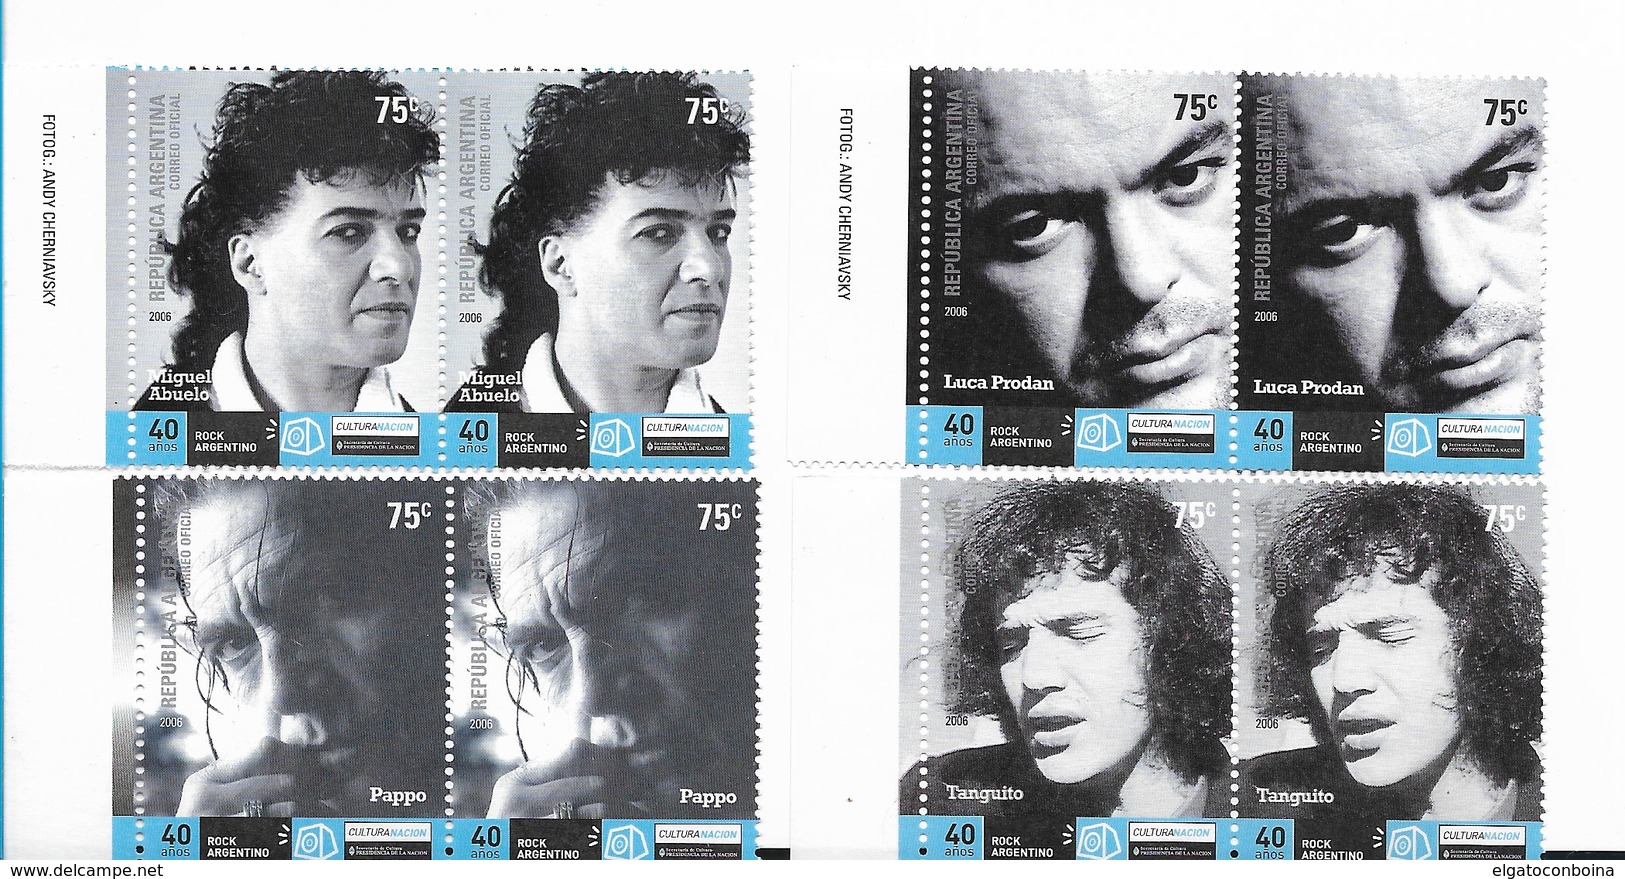 ARGENTINA 2006 NATIONAL ROCK SINGER MUSICIANMUSIC LUCA PRODAN PAPPO MIGUEL ABUELO TANGUITO SET OF 4 PAIRS - Unused Stamps